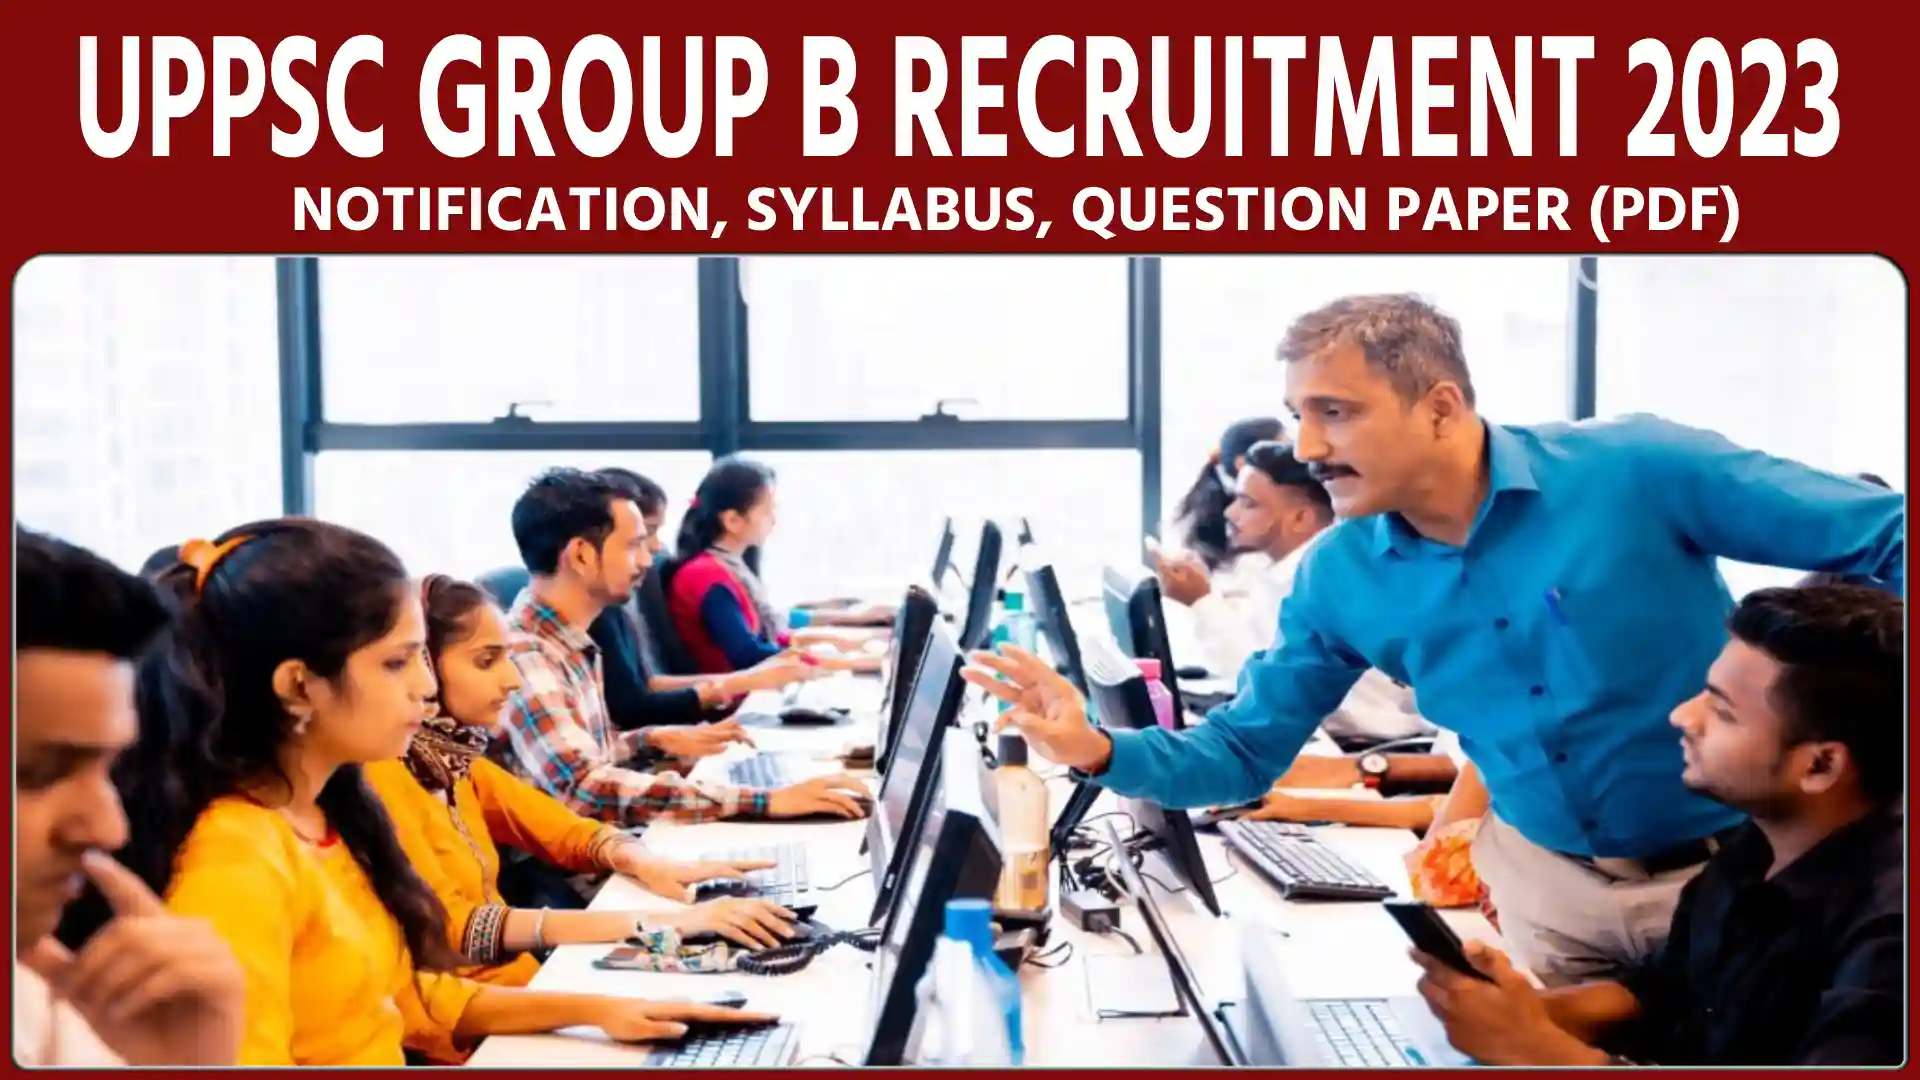 UPPSC Group B Recruitment 